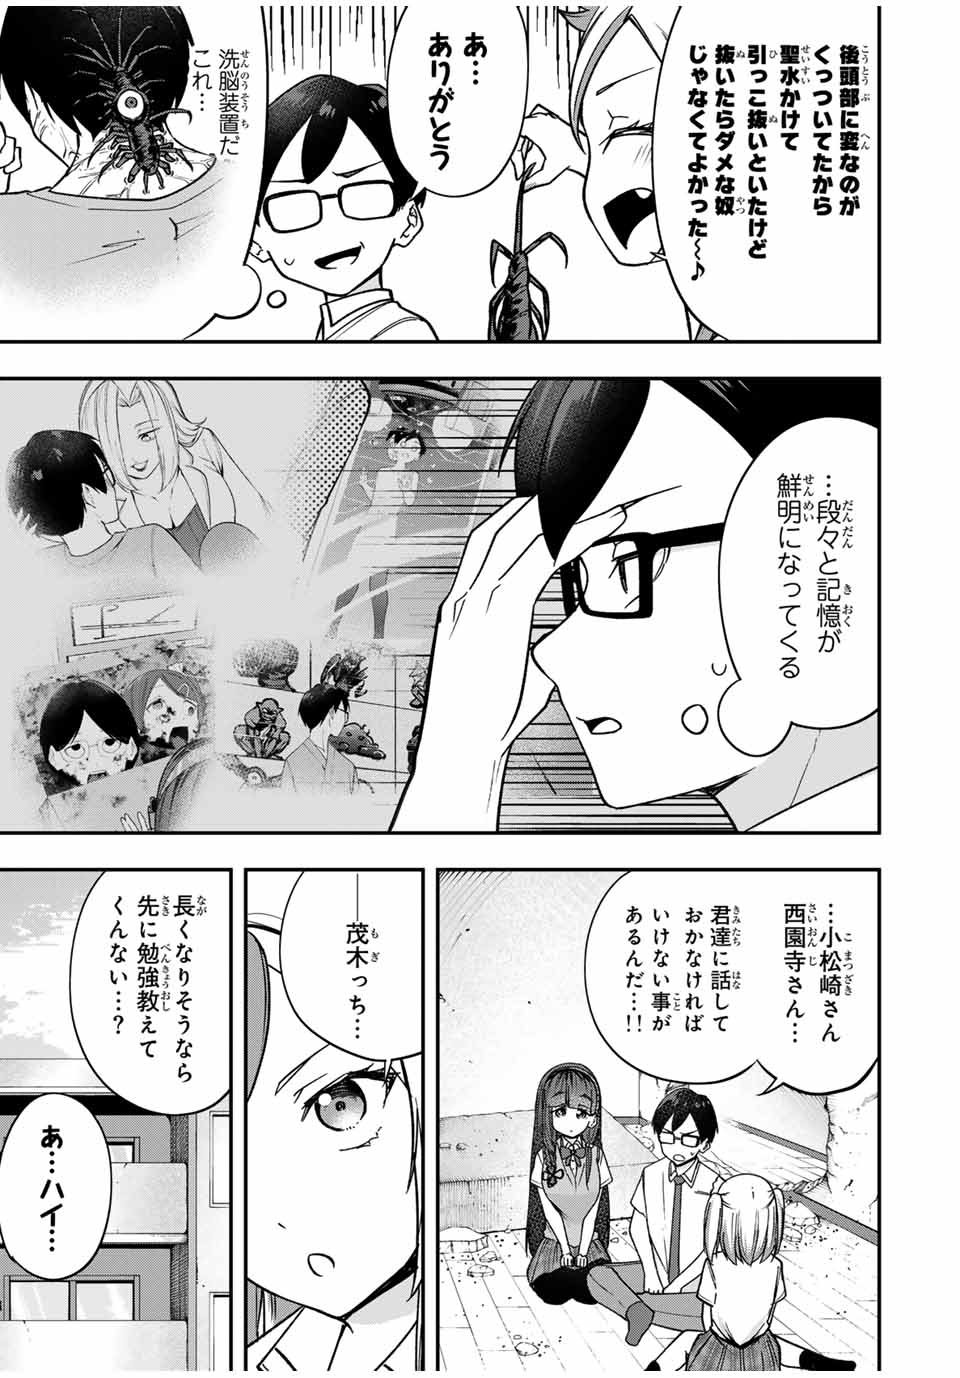 Heroine wa xx Okasegitai - Chapter 10 - Page 19